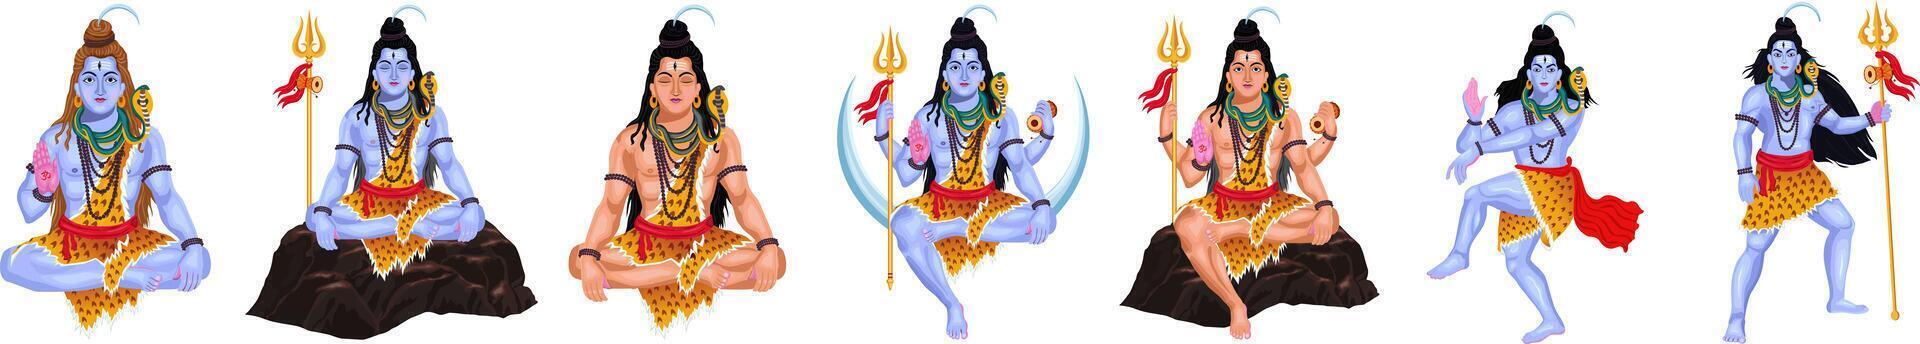 señor shiva ilustración para contento maha shivratri, social medios de comunicación correo, web bandera, saludos, estado vector